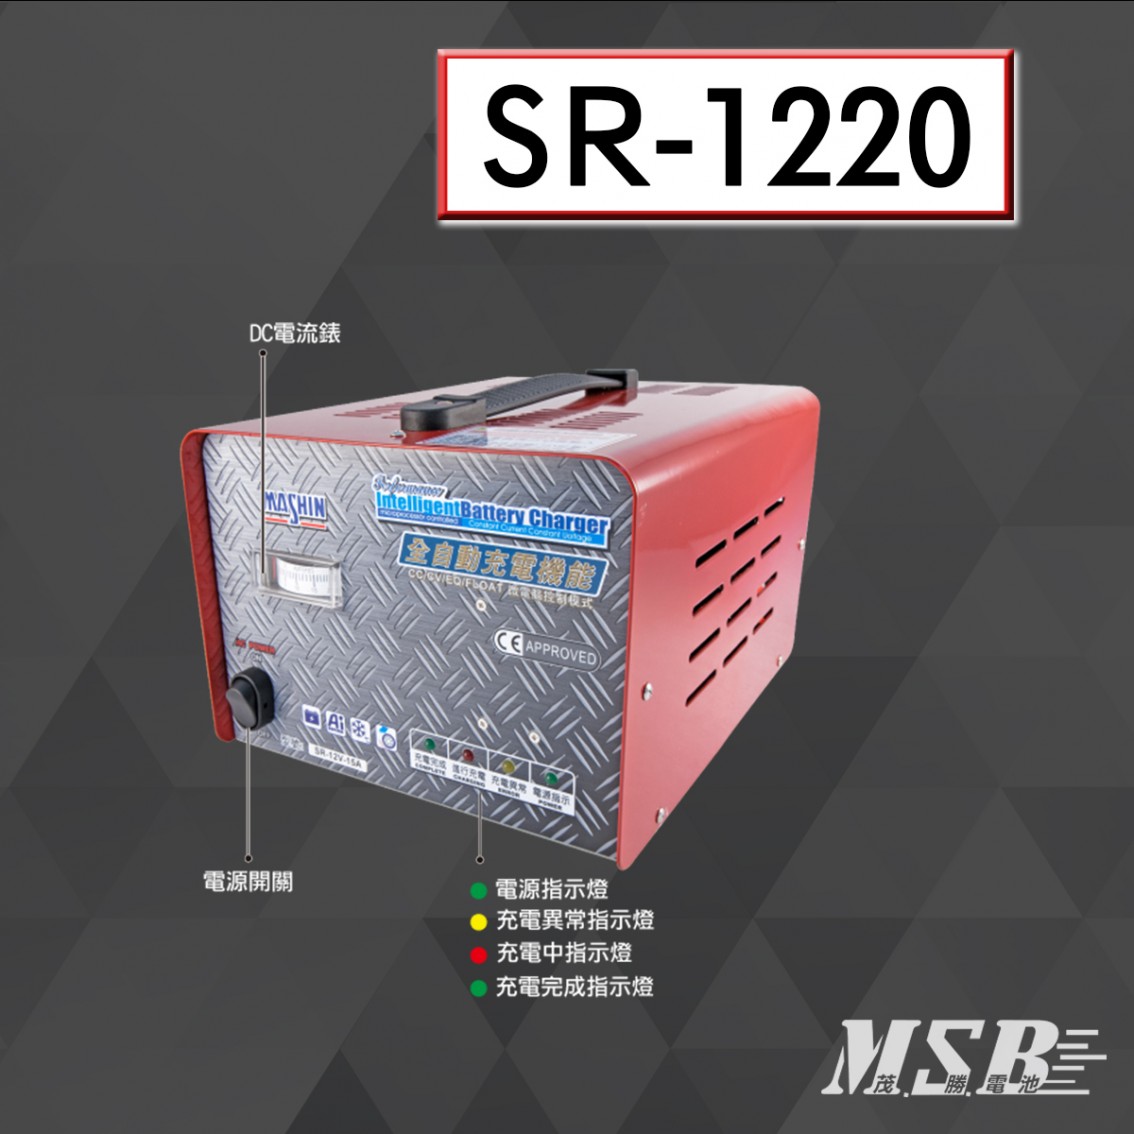 SR-1220